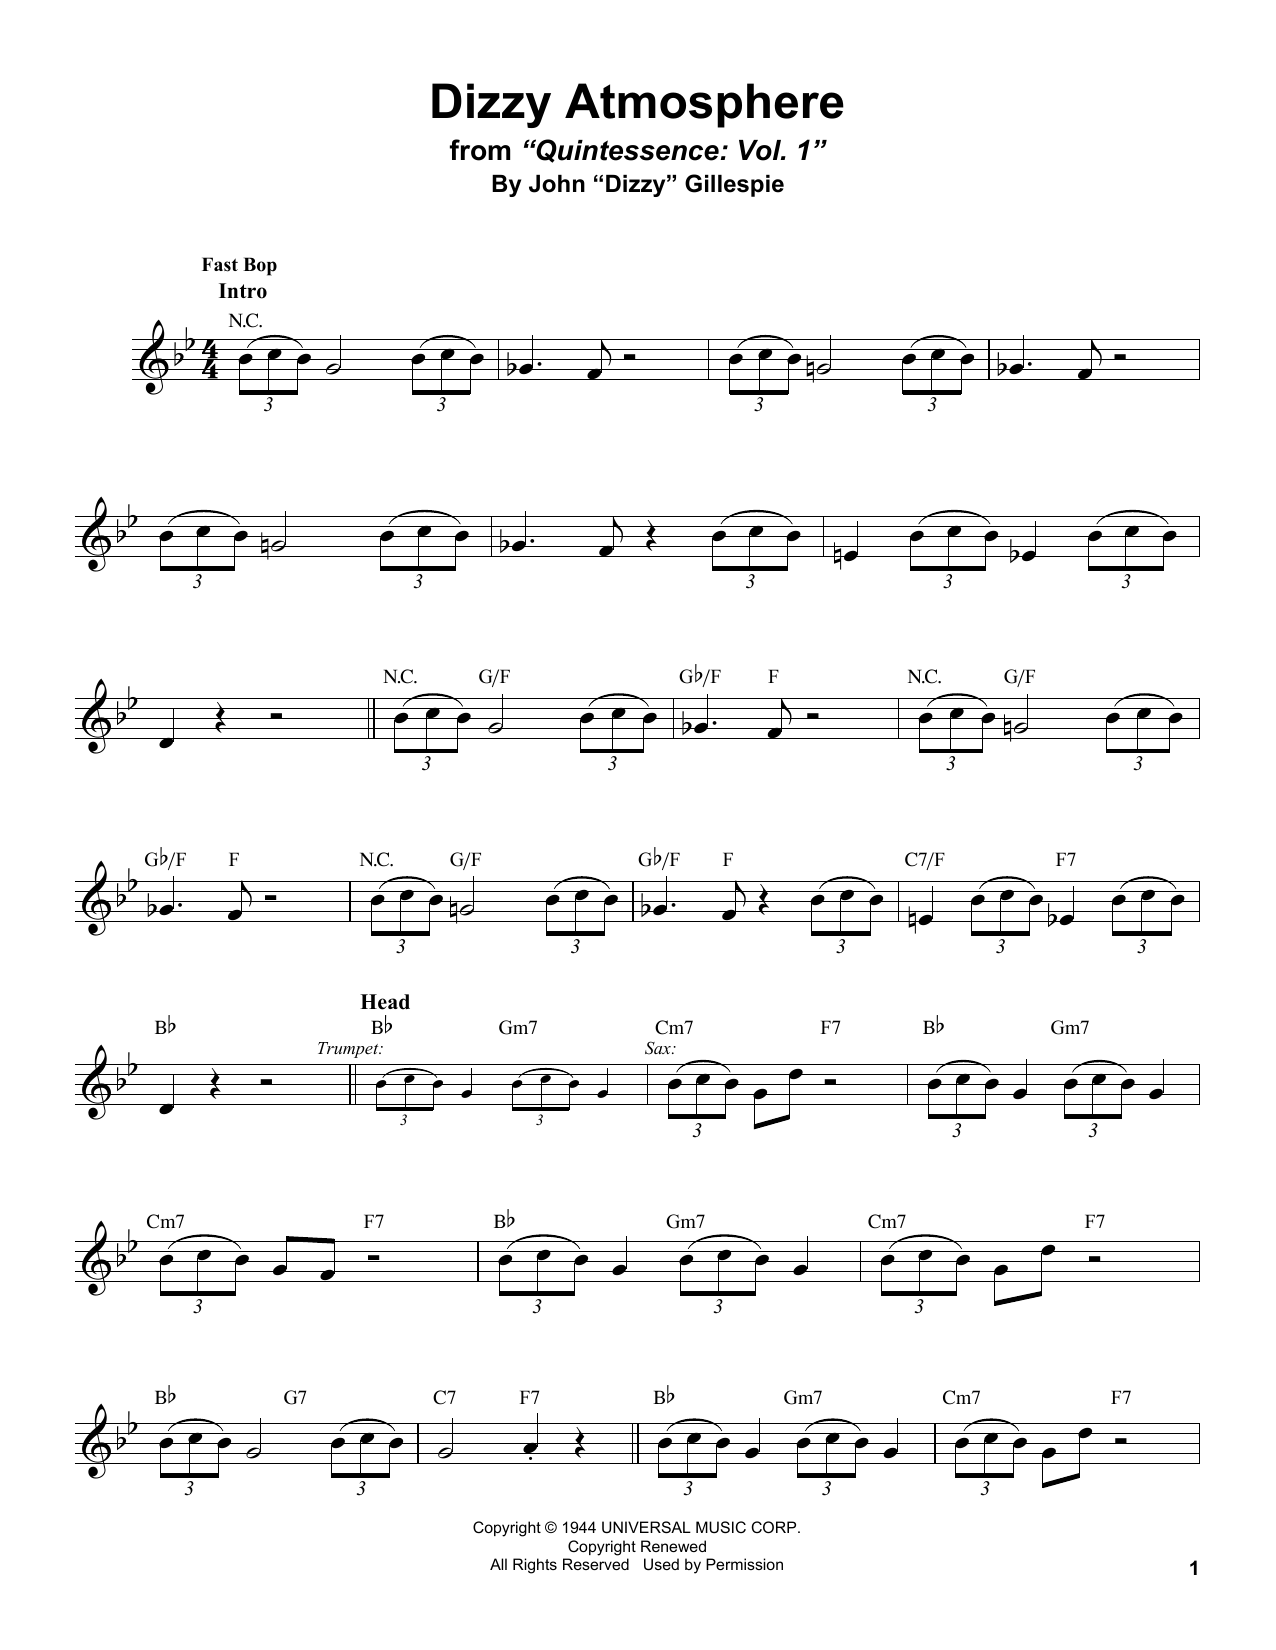 Stan Getz Dizzy Atmosphere Sheet Music Notes & Chords for Tenor Sax Transcription - Download or Print PDF